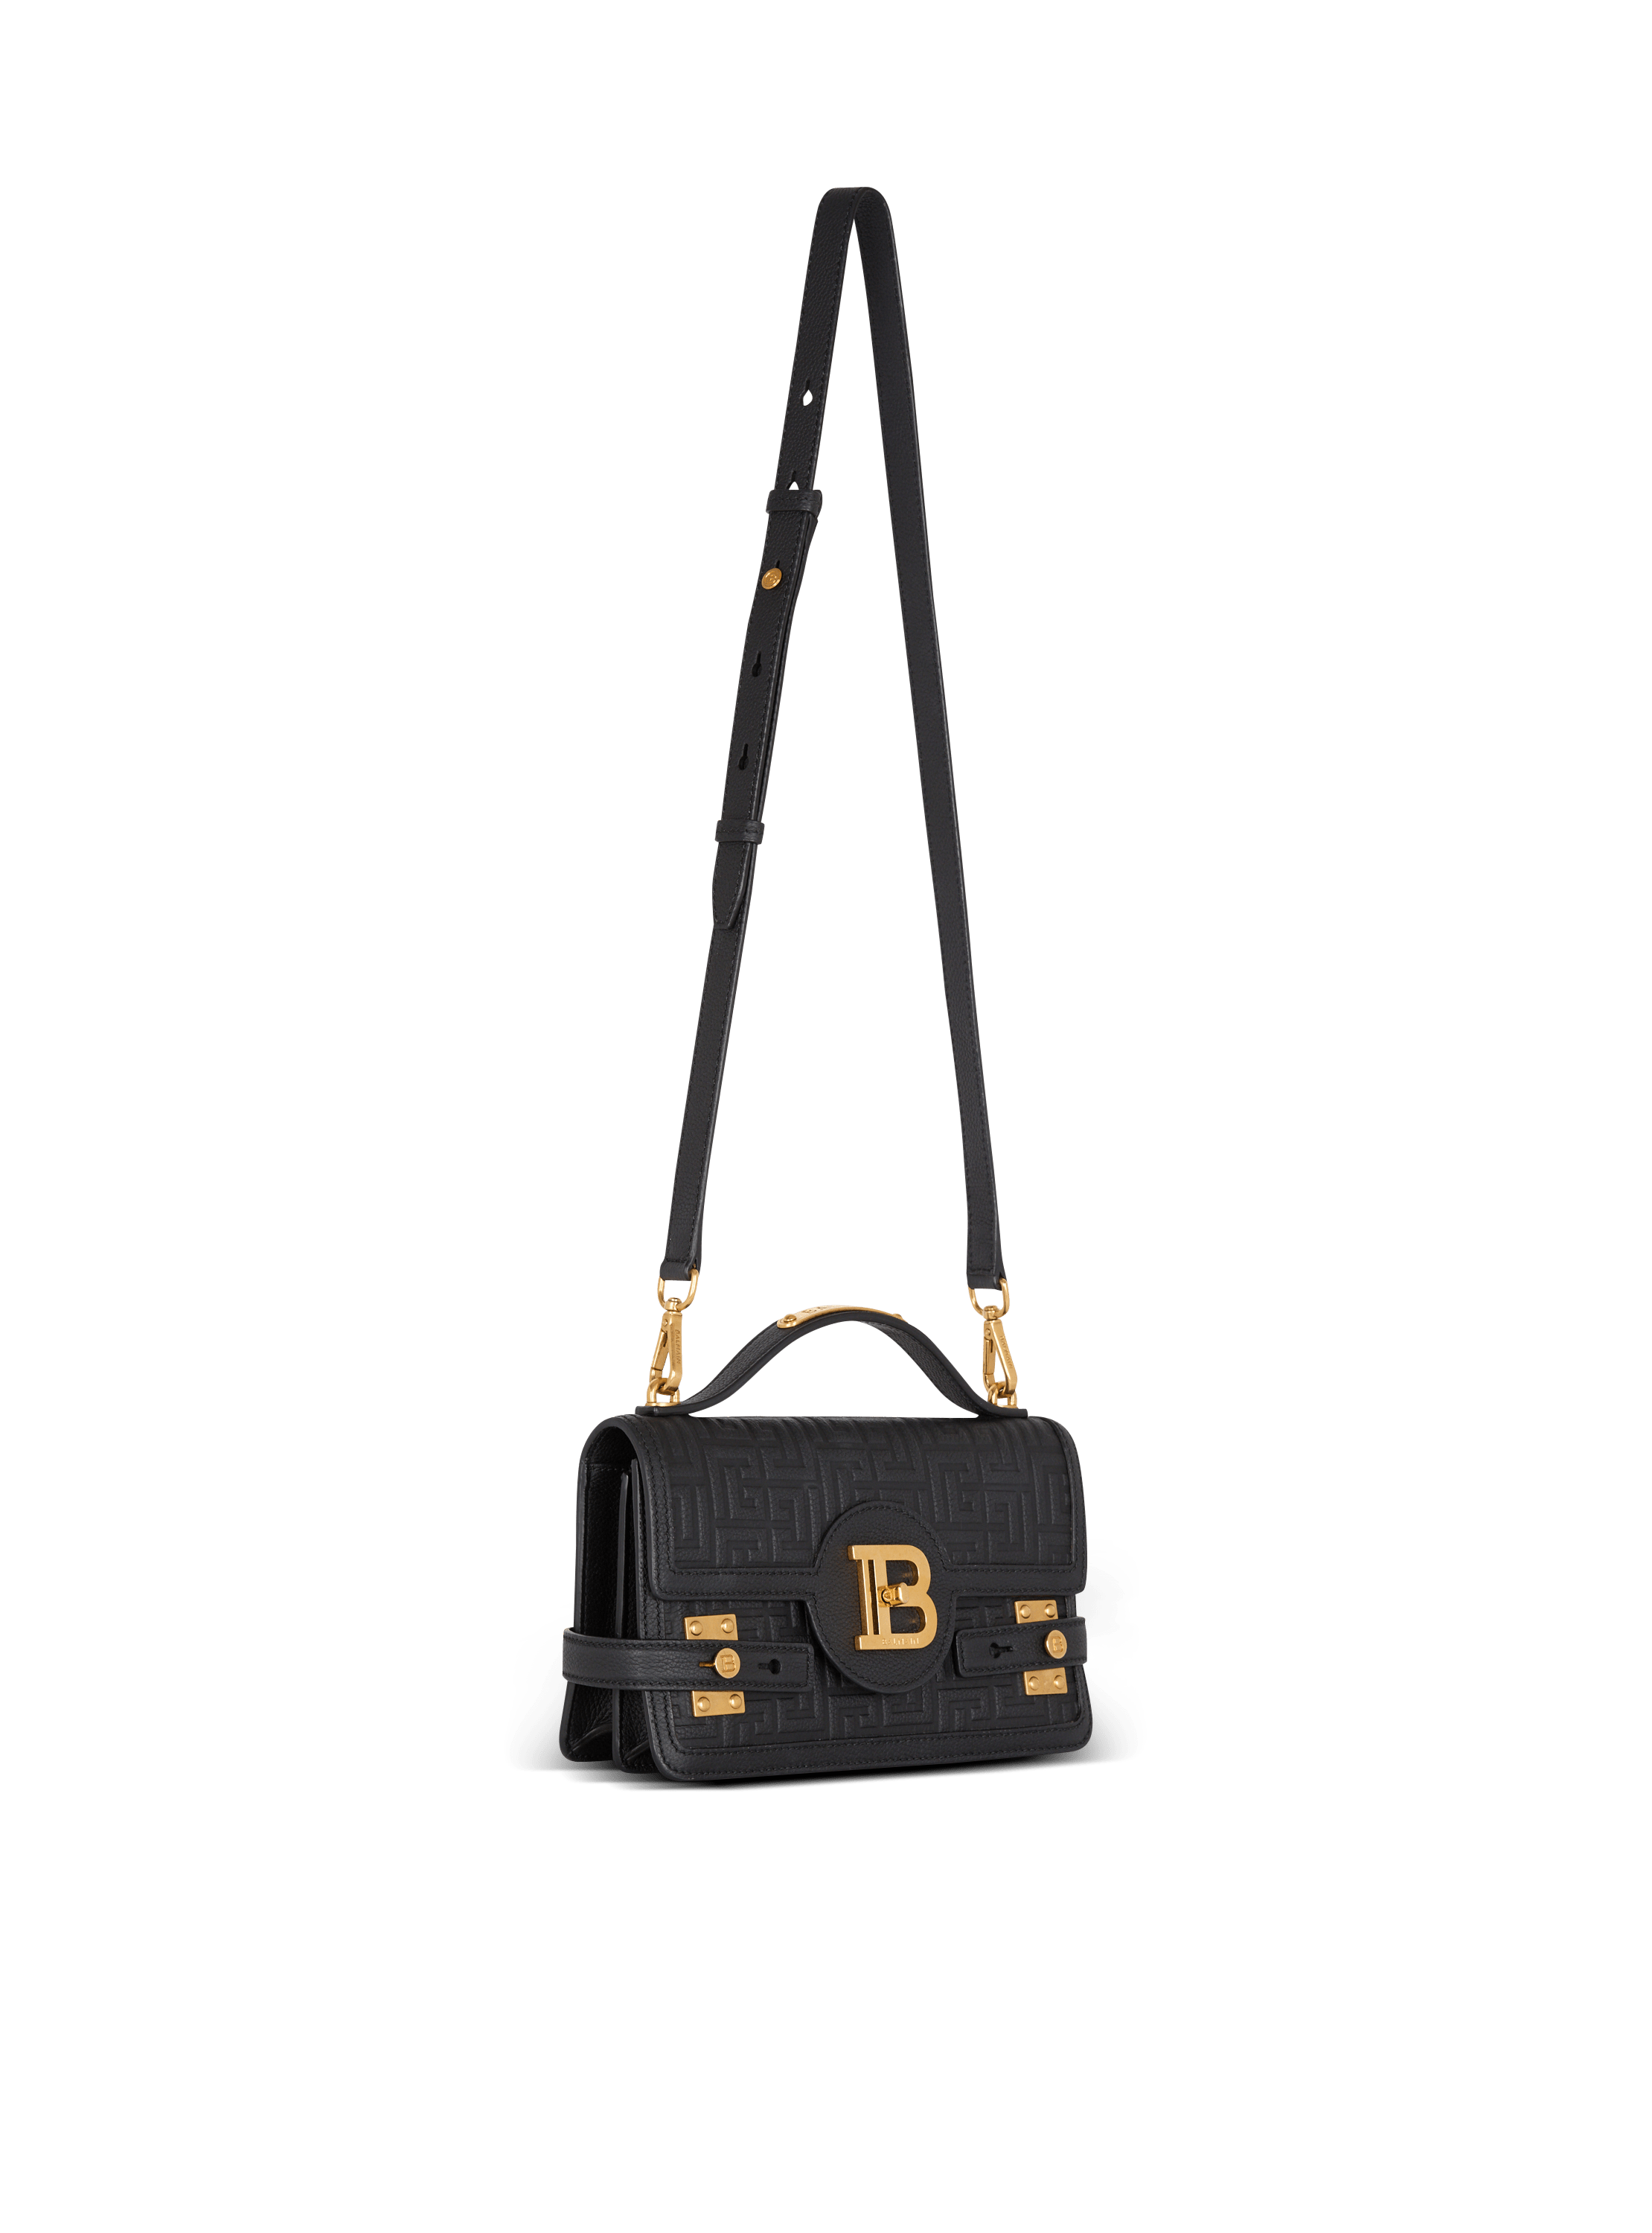 B-Buzz 24 grained monogram leather Shoulder bag